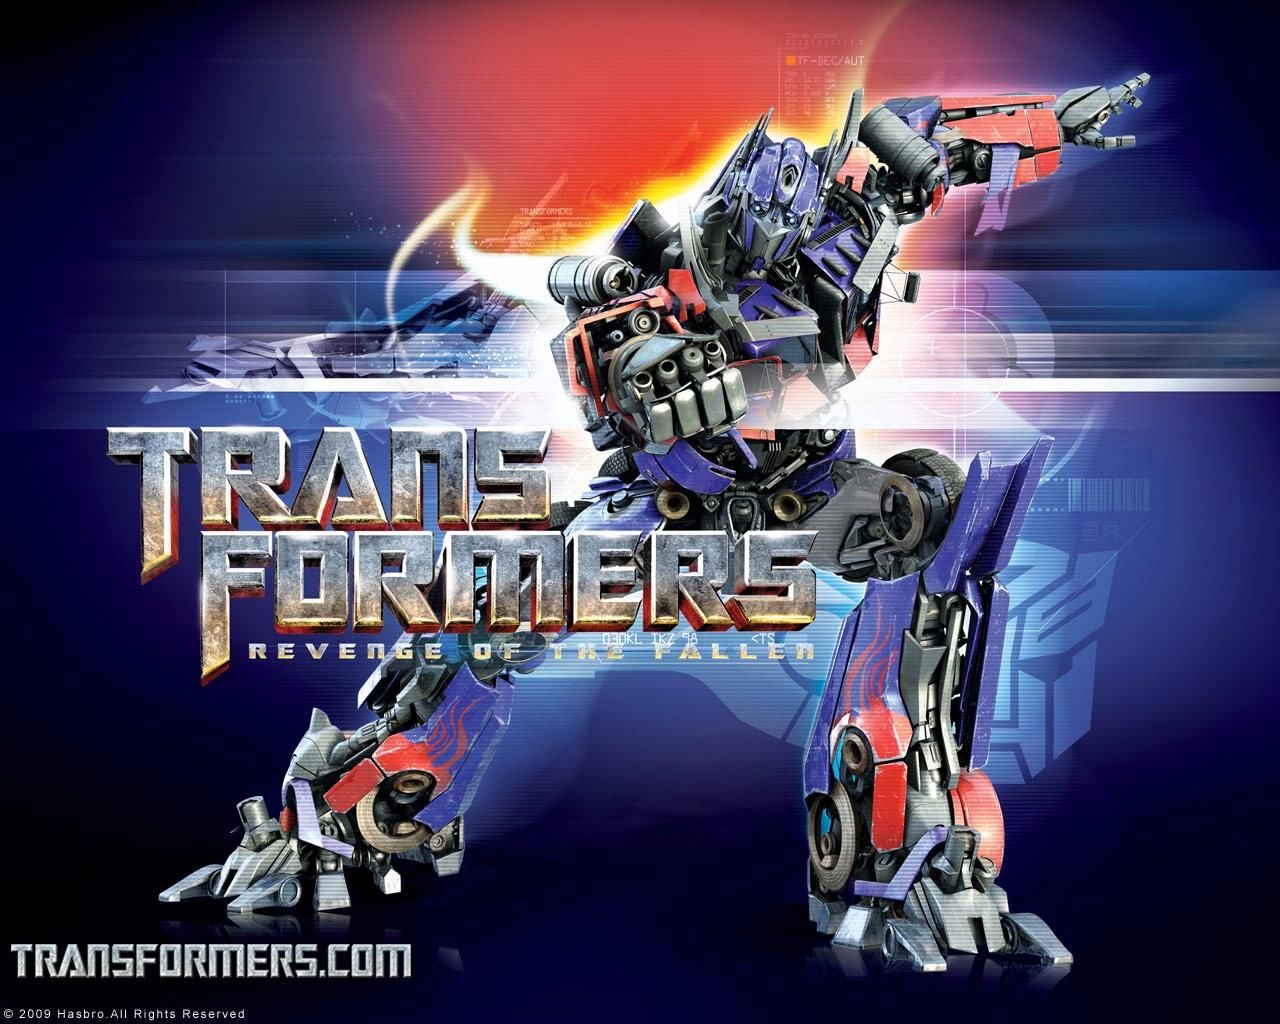 Transformers 2 style wallpaper #1 - 1280x1024